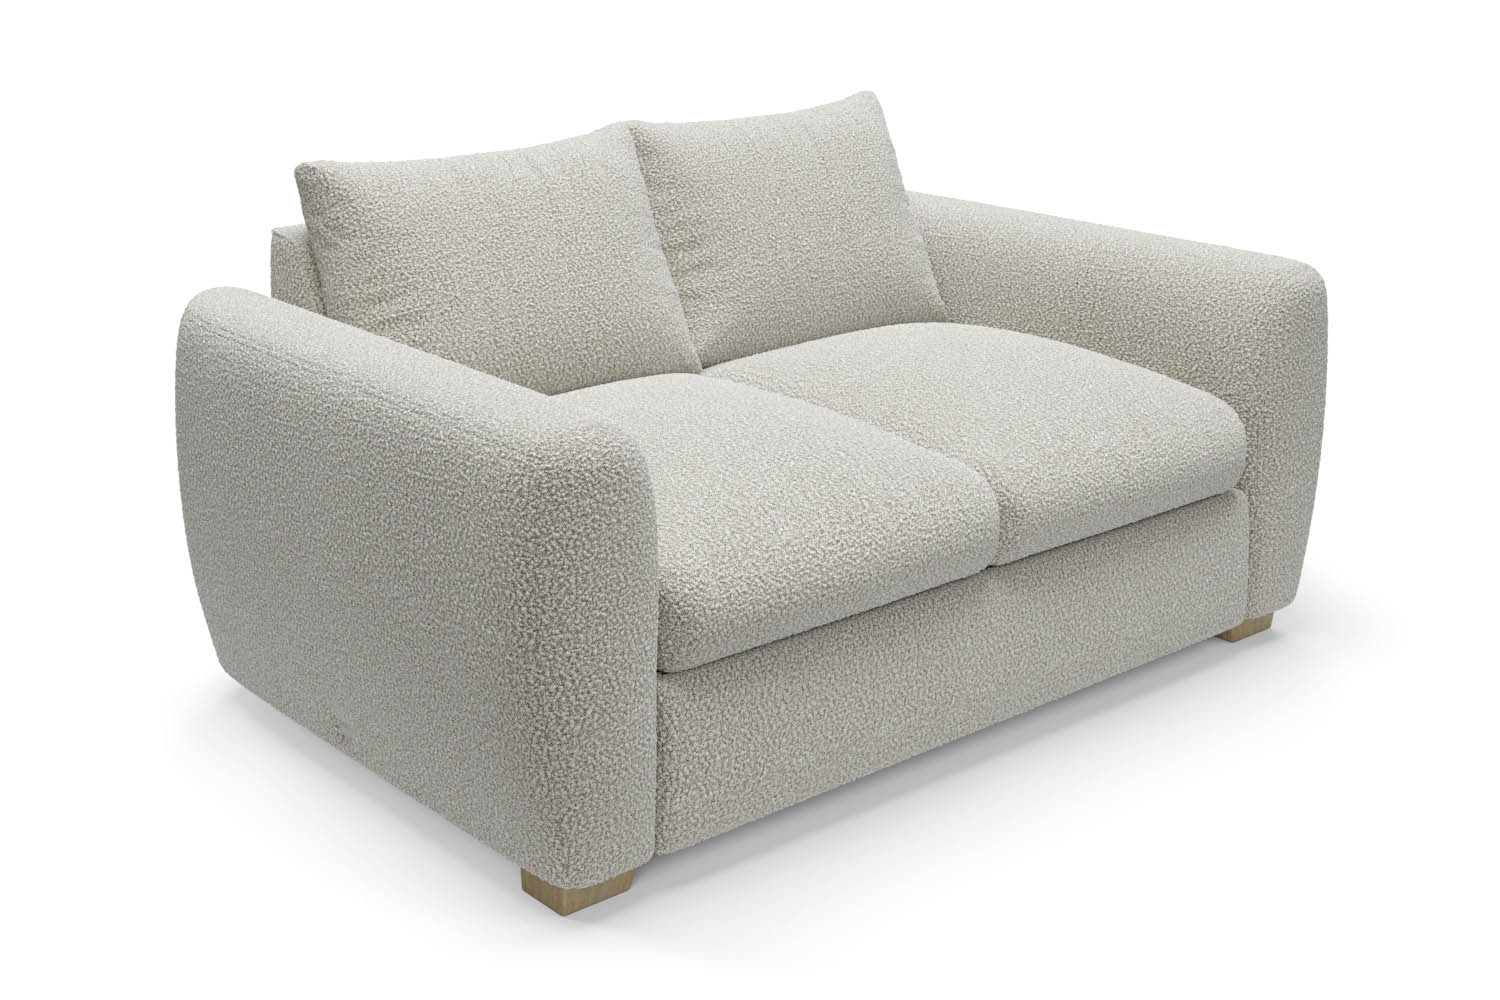 The Cloud Sundae - 2 Seater Sofa - Fuzzy White Boucle